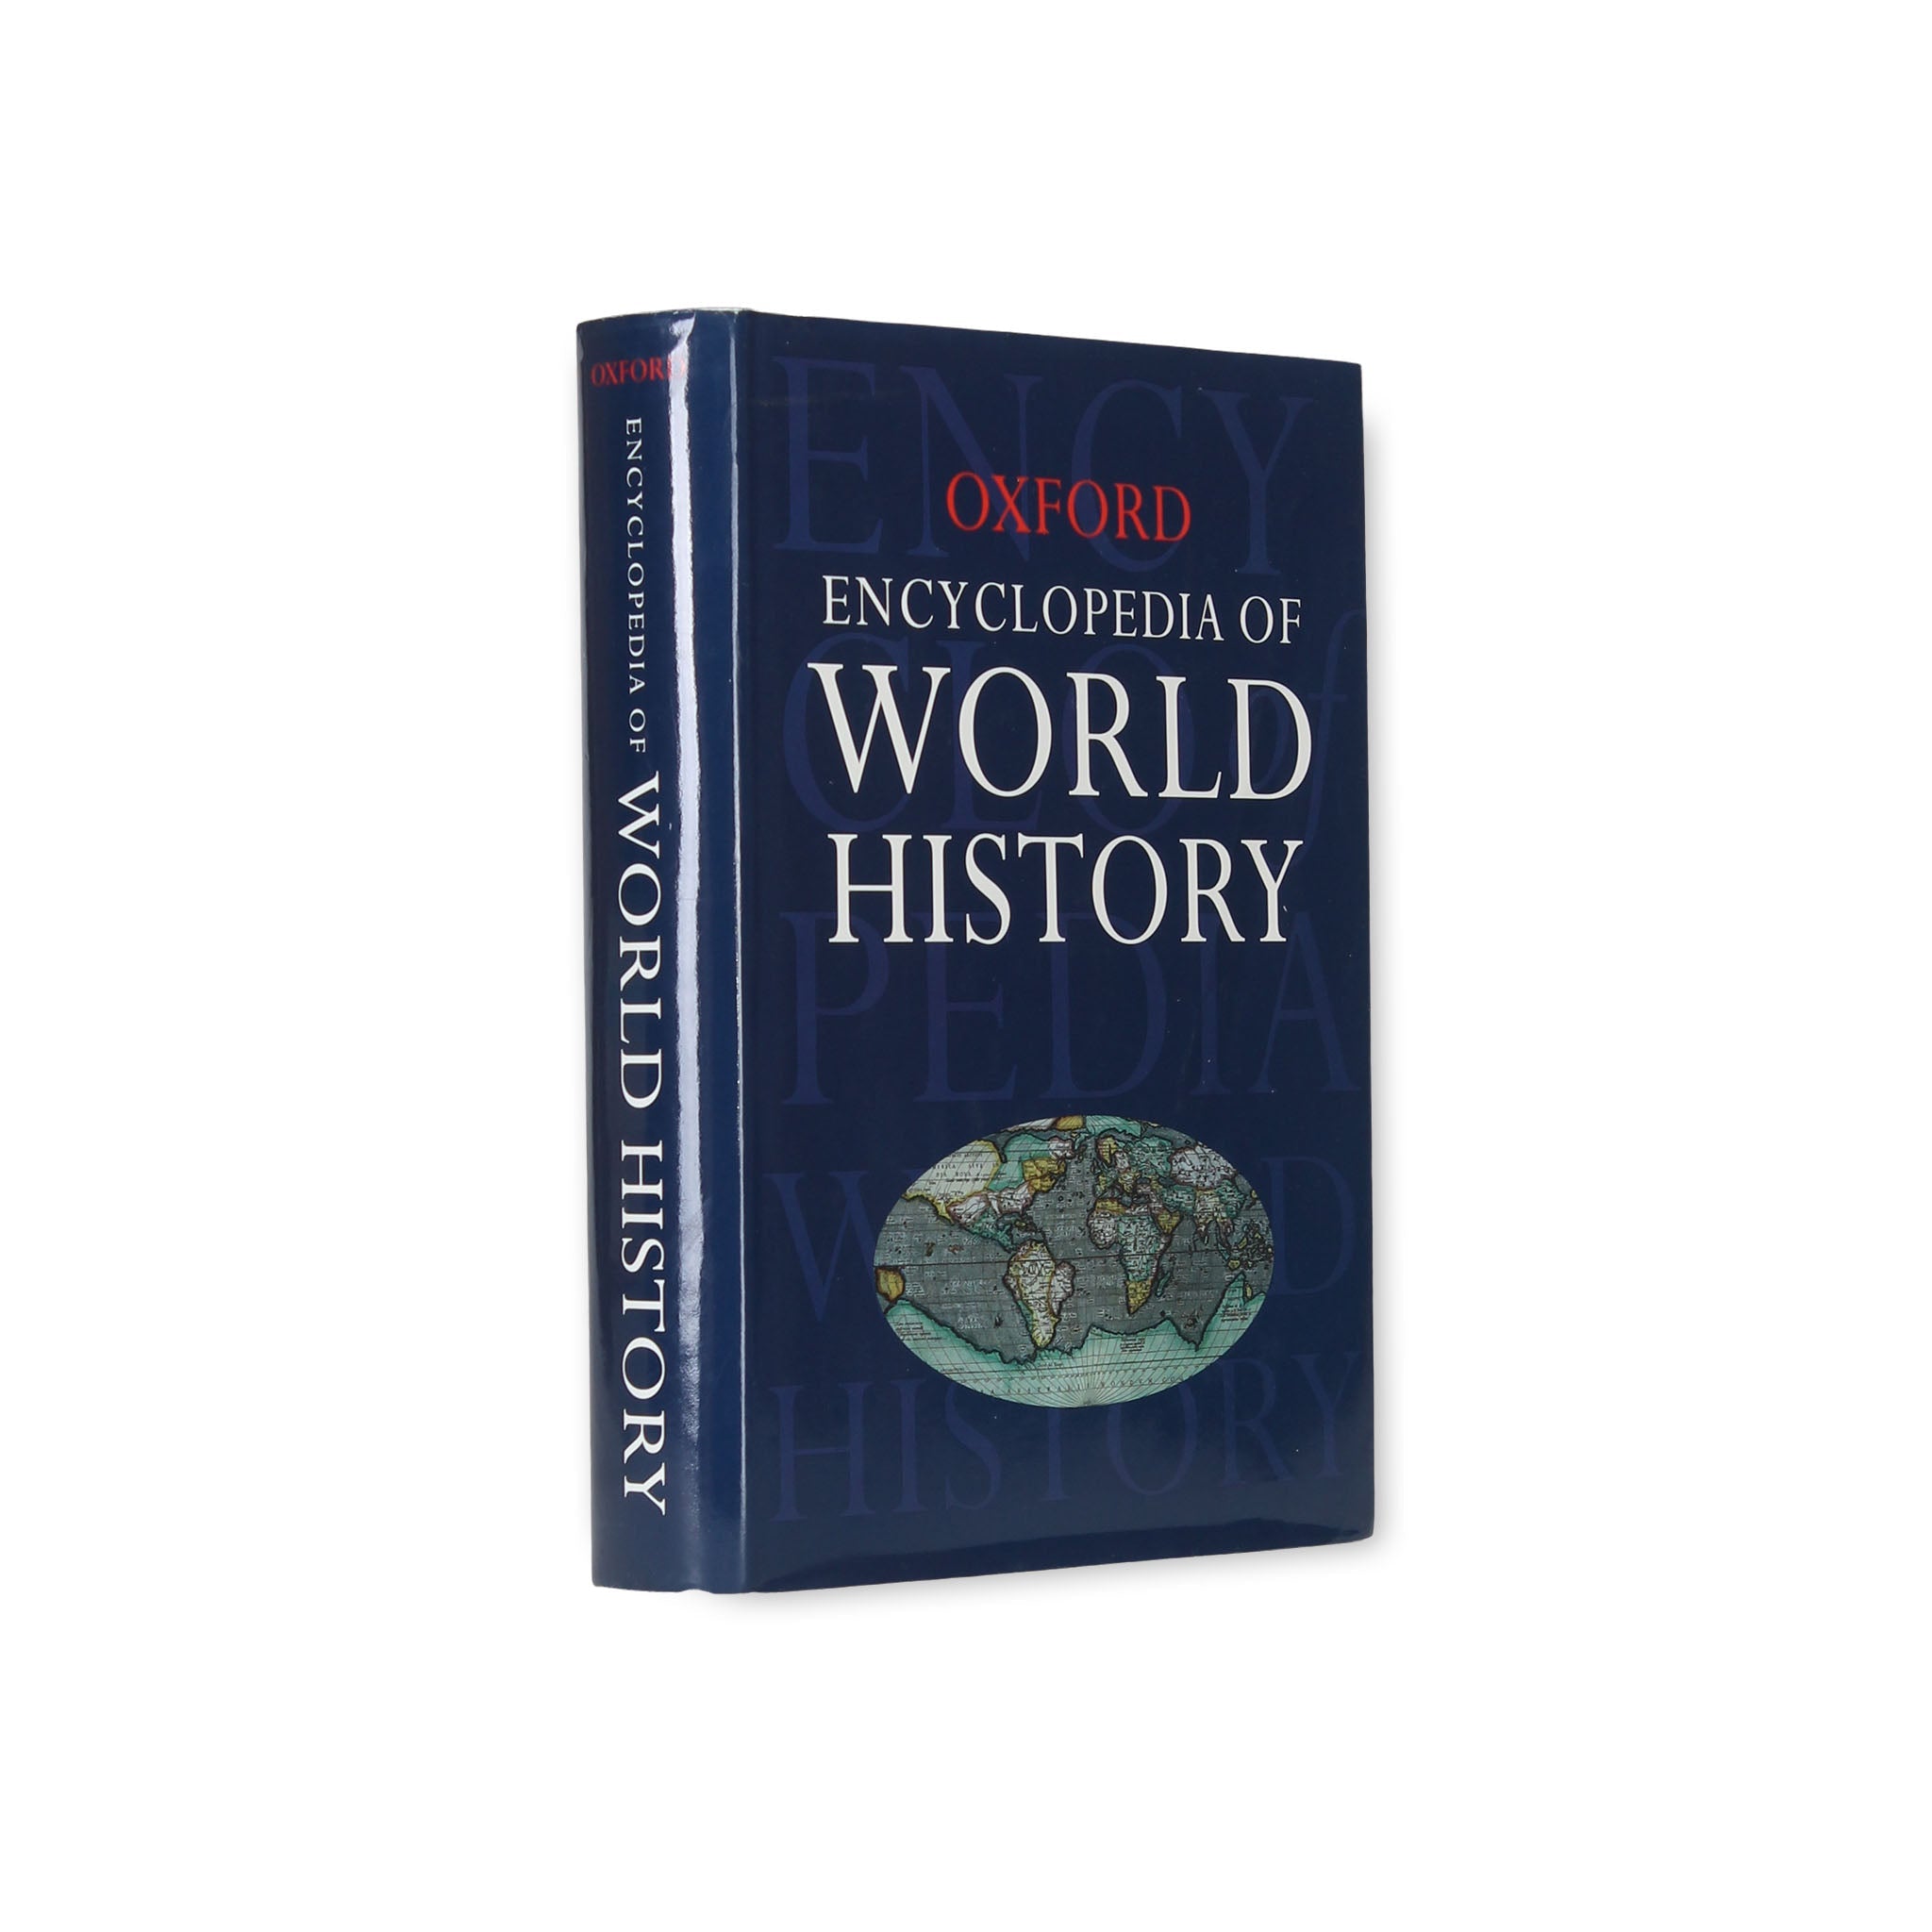 Oxford Encyclopedia of World History - XL Hollow Book Safe - Secret Storage Books